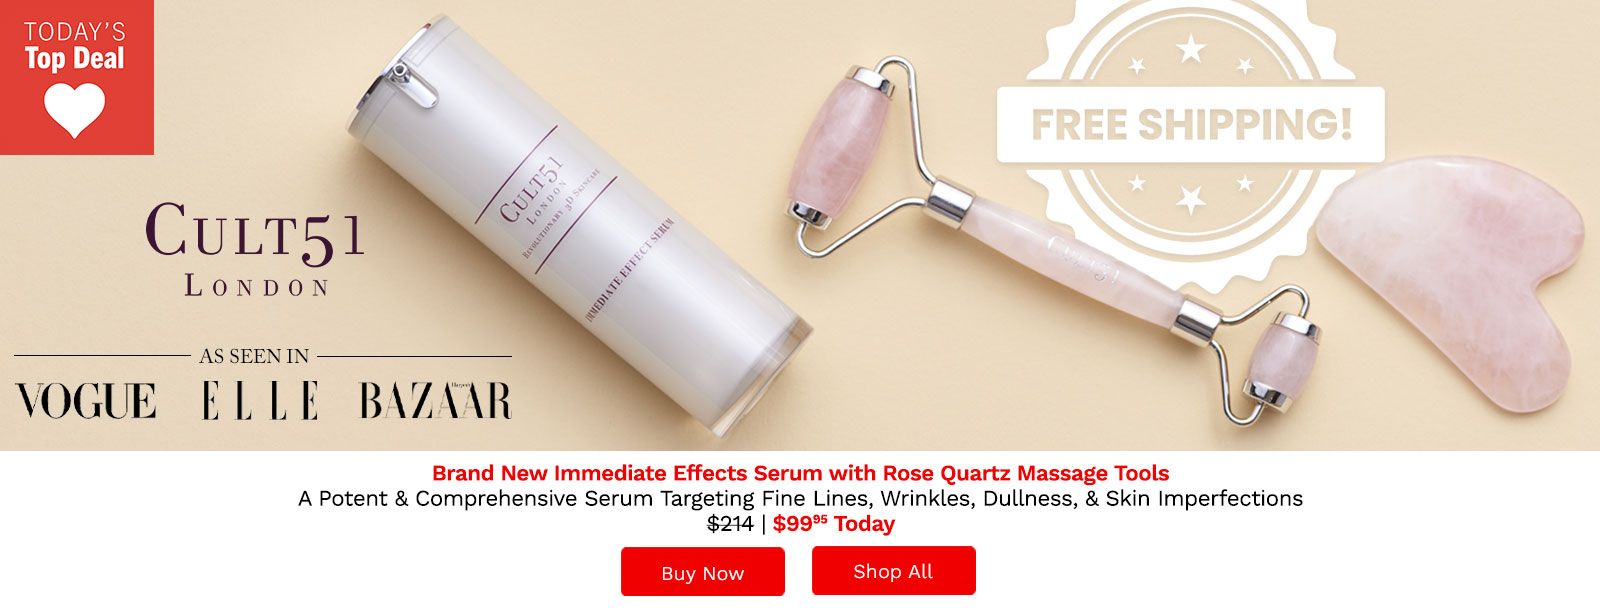 323-919 Cult51 Immediate Effects Serum w Rose Quartz Massage Tools